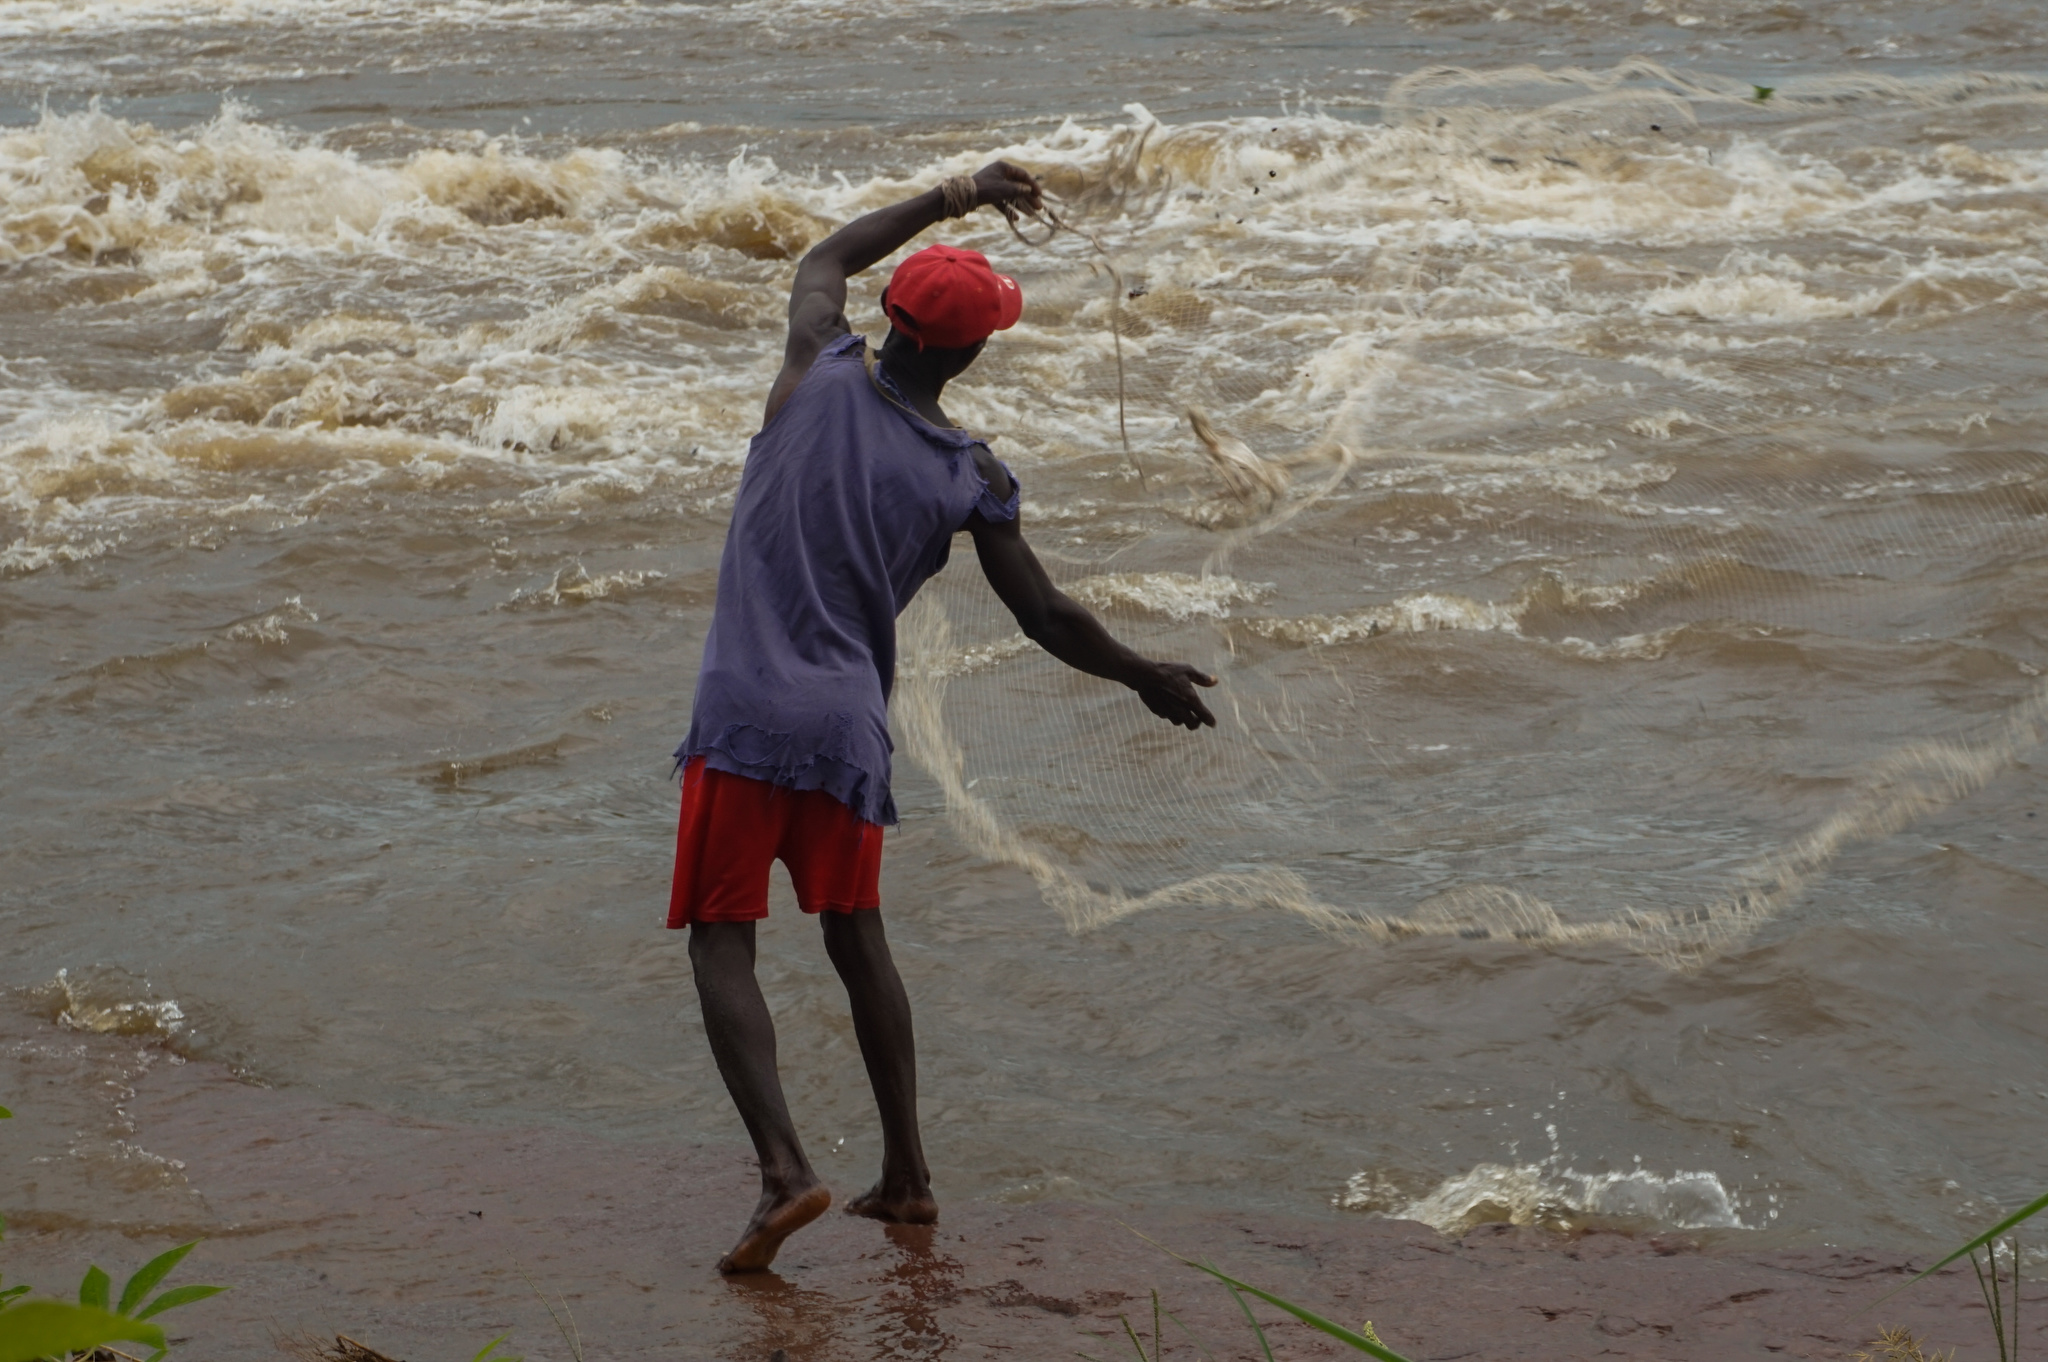 DRC’s Artisanal Fishing Methods Come Up Short